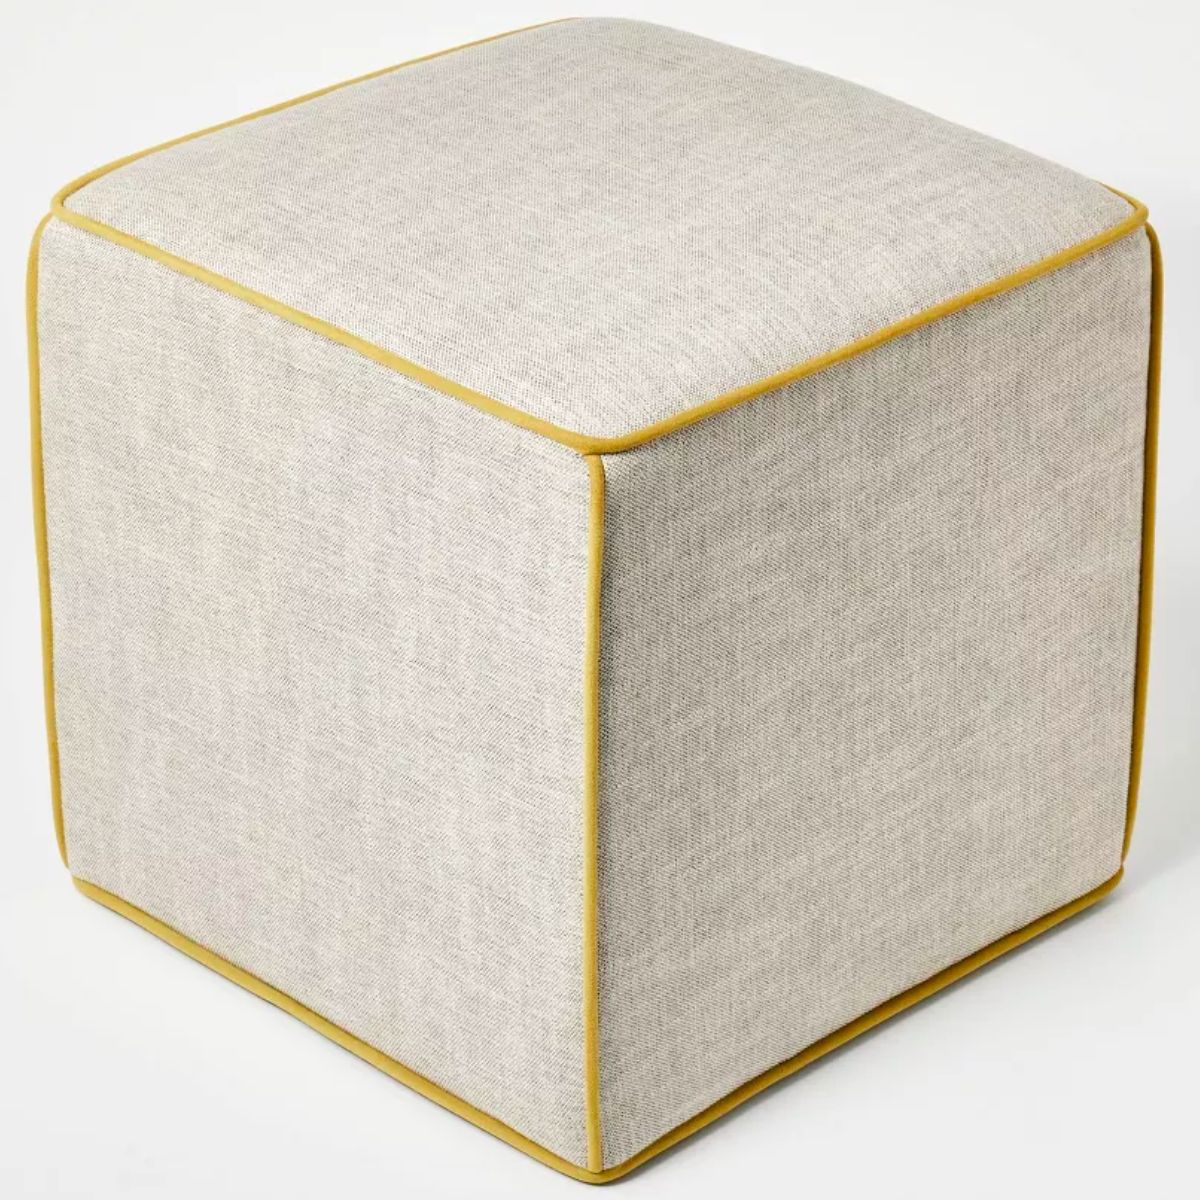 Lynwood Square Upholstered cube in khaki linen like fabric stock image